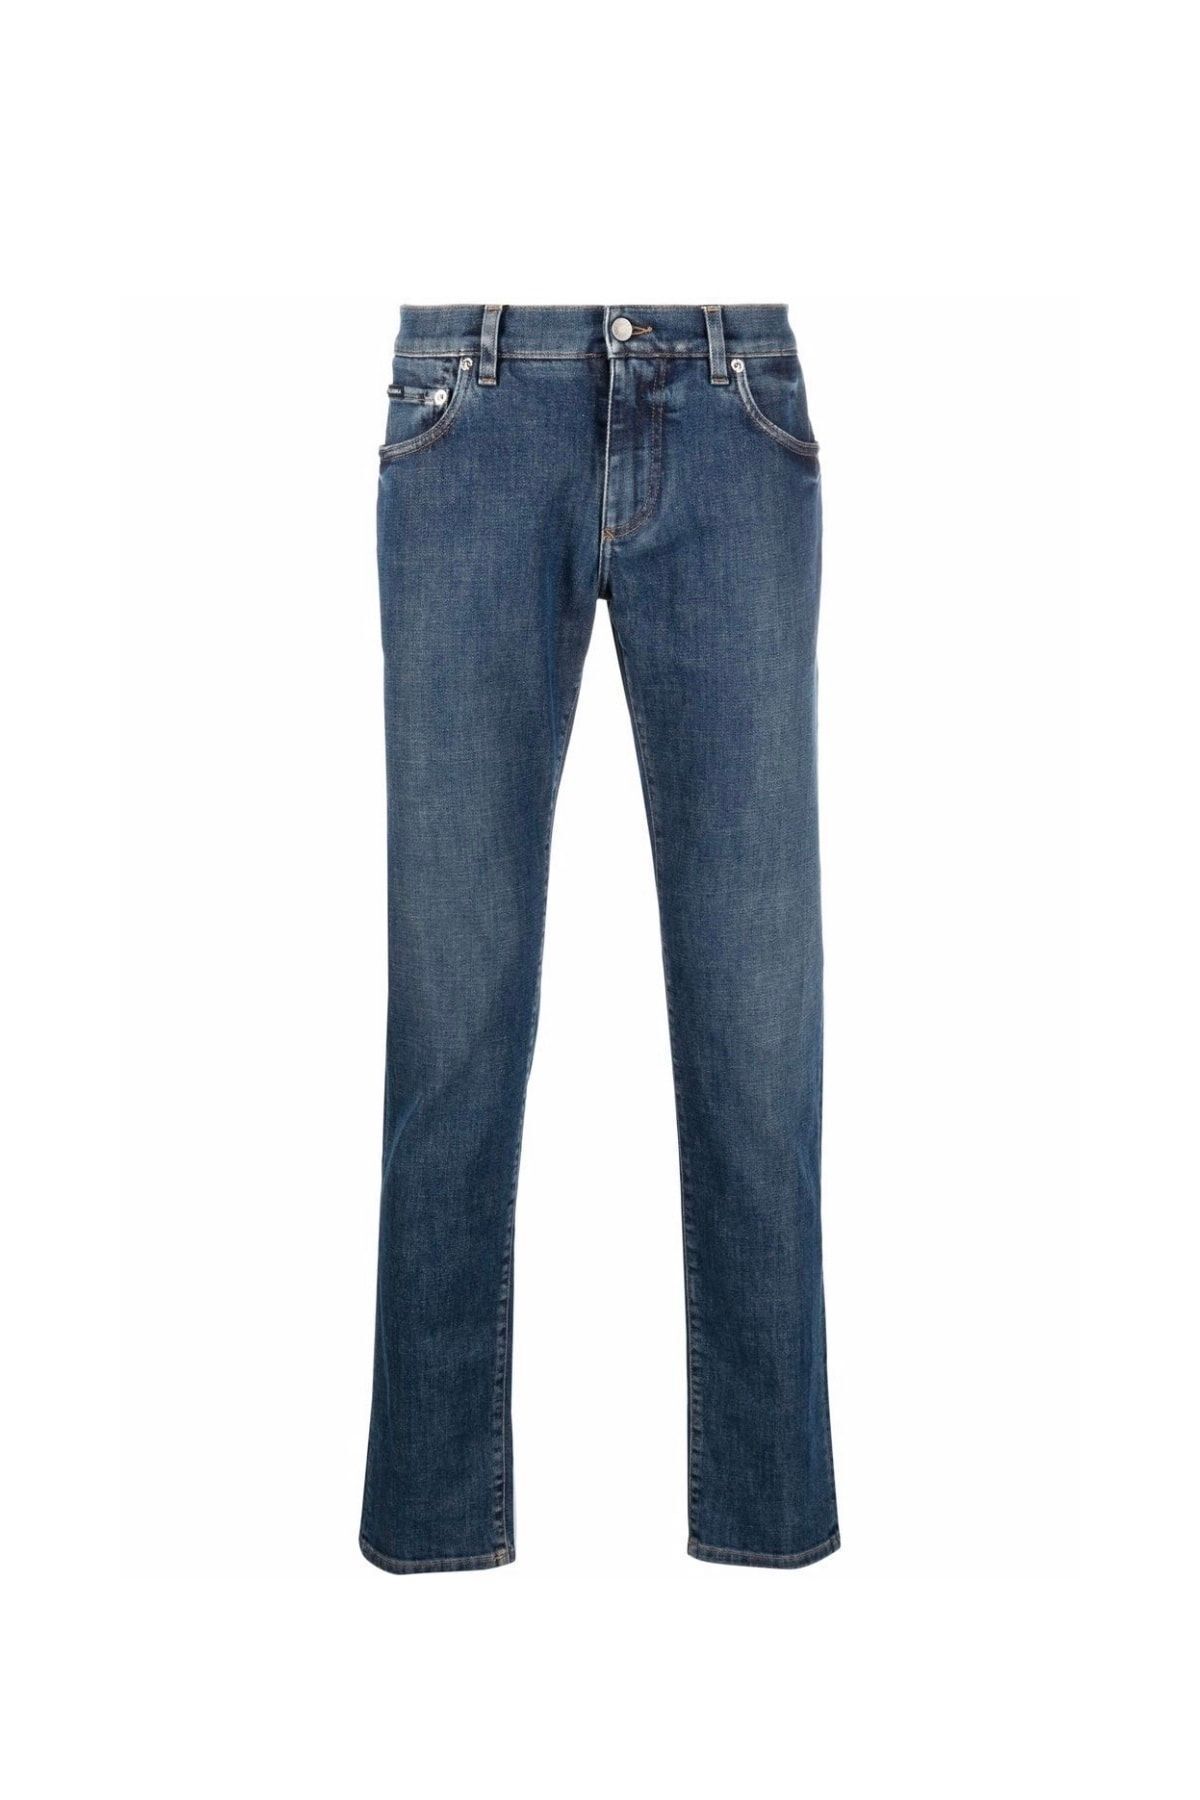 Dolce&Gabbana Skinny Fit Denim Jeans